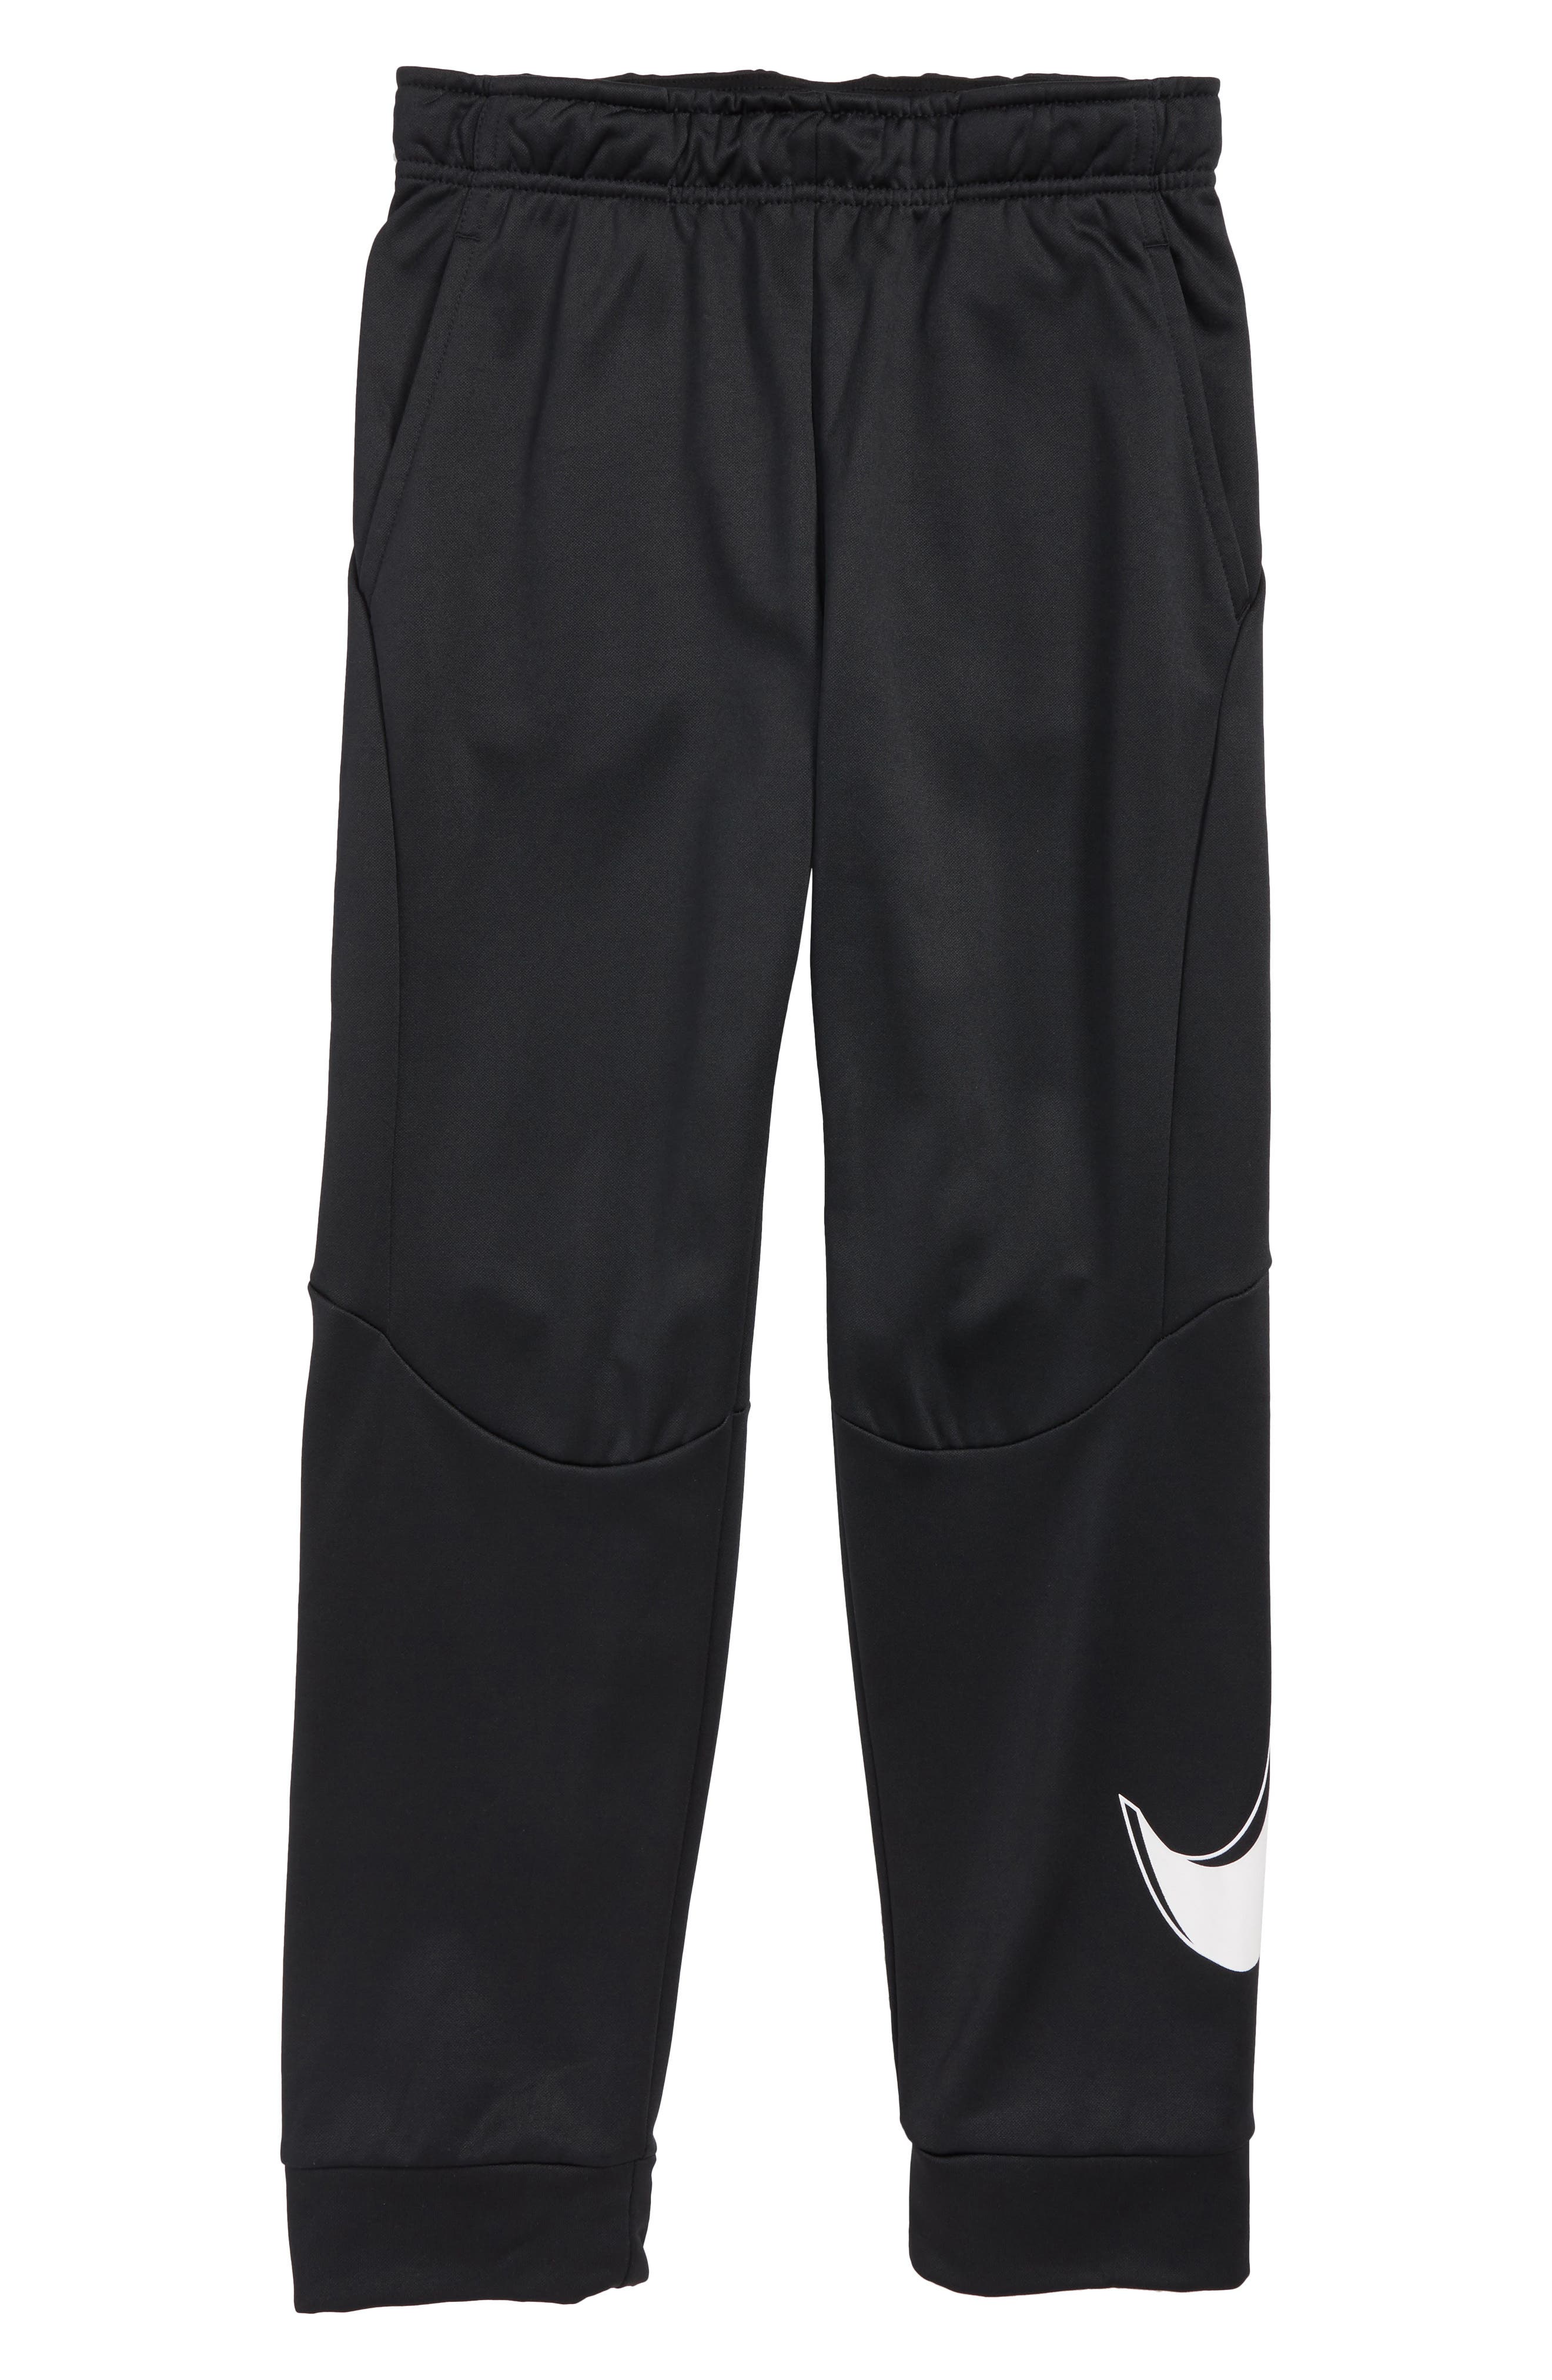 UPC 885178924200 product image for Boy's Nike Therma Sweatpants, Size L (14-16) - Black | upcitemdb.com